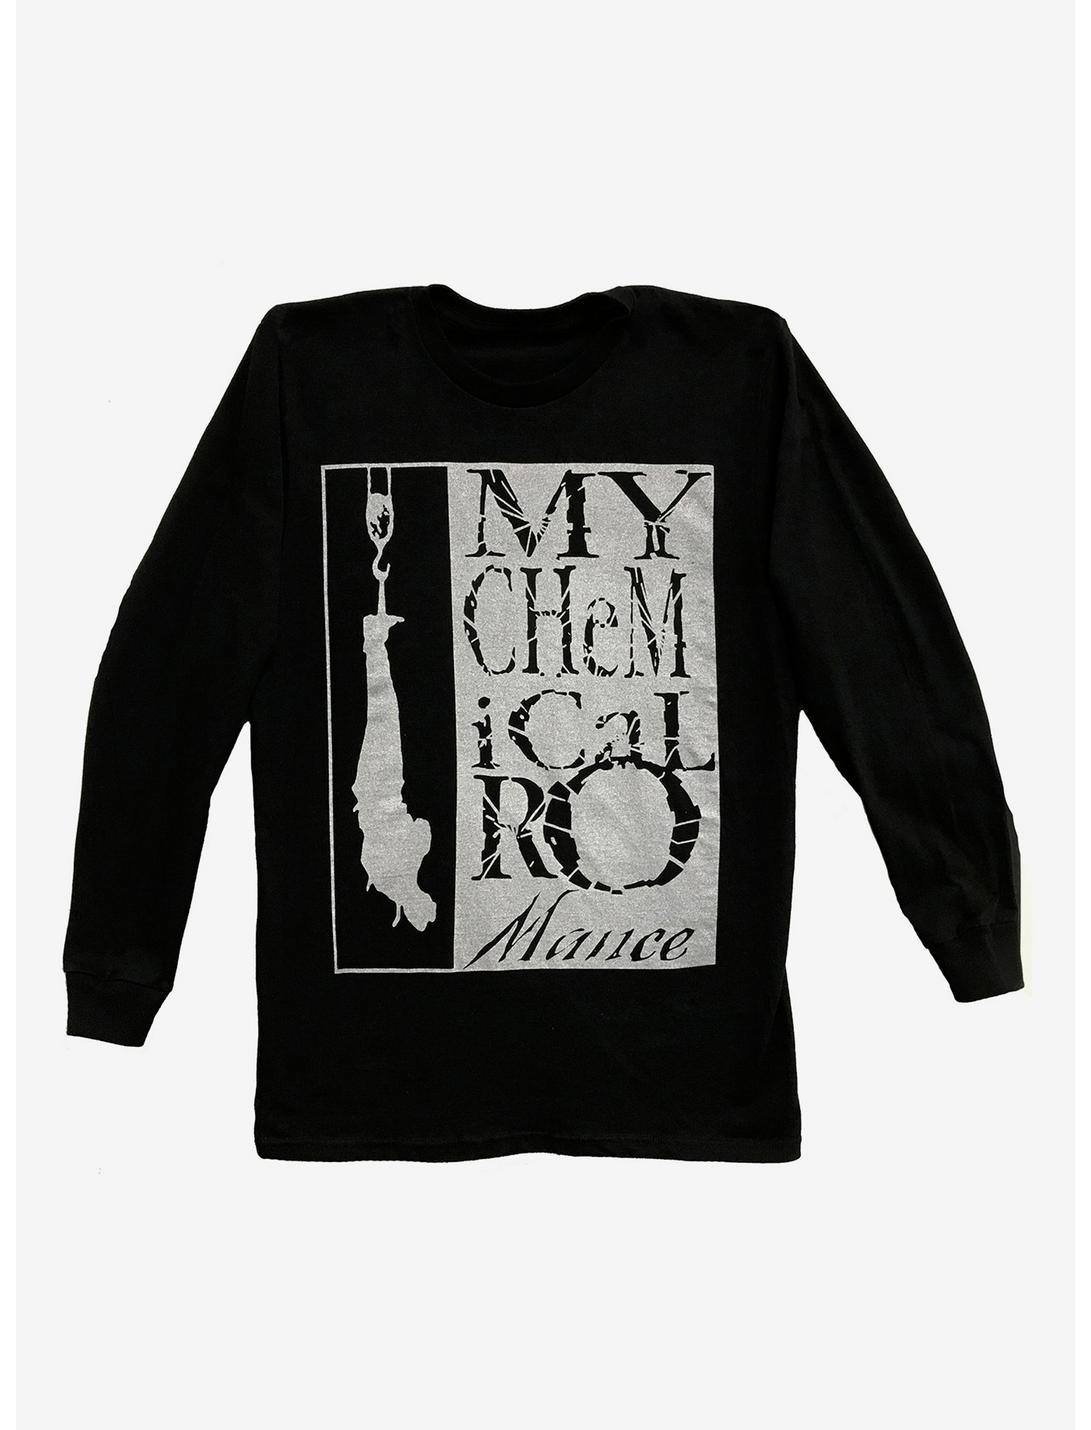 My Chemical Romance Hangman Long-Sleeve T-Shirt, BLACK, hi-res